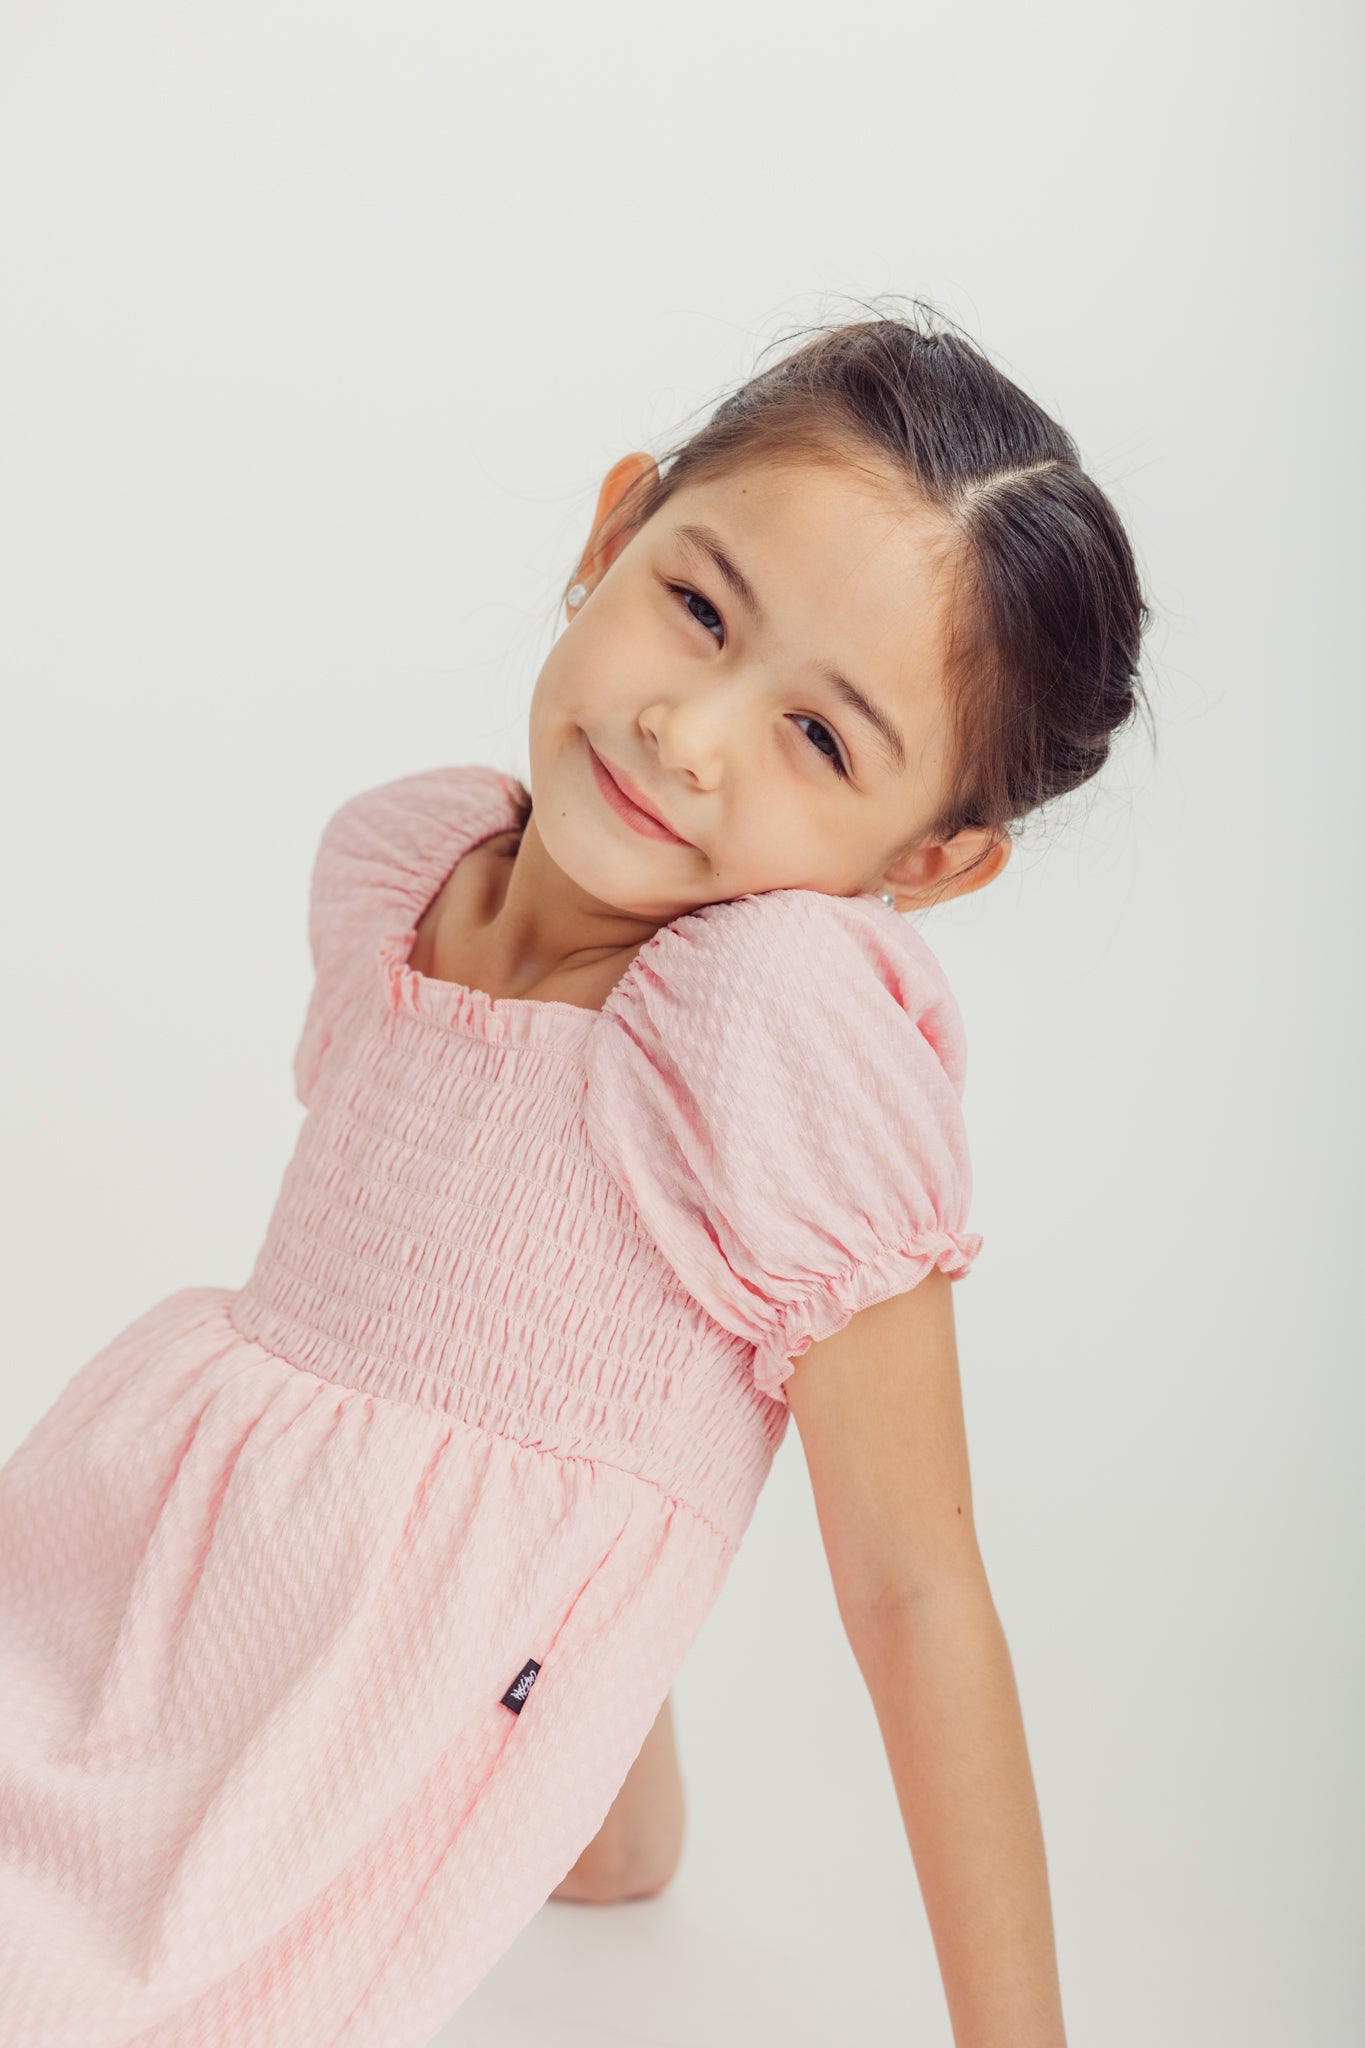 Pink Shirred Puff Sleeve A-Line Dress Kids - Mossimo PH